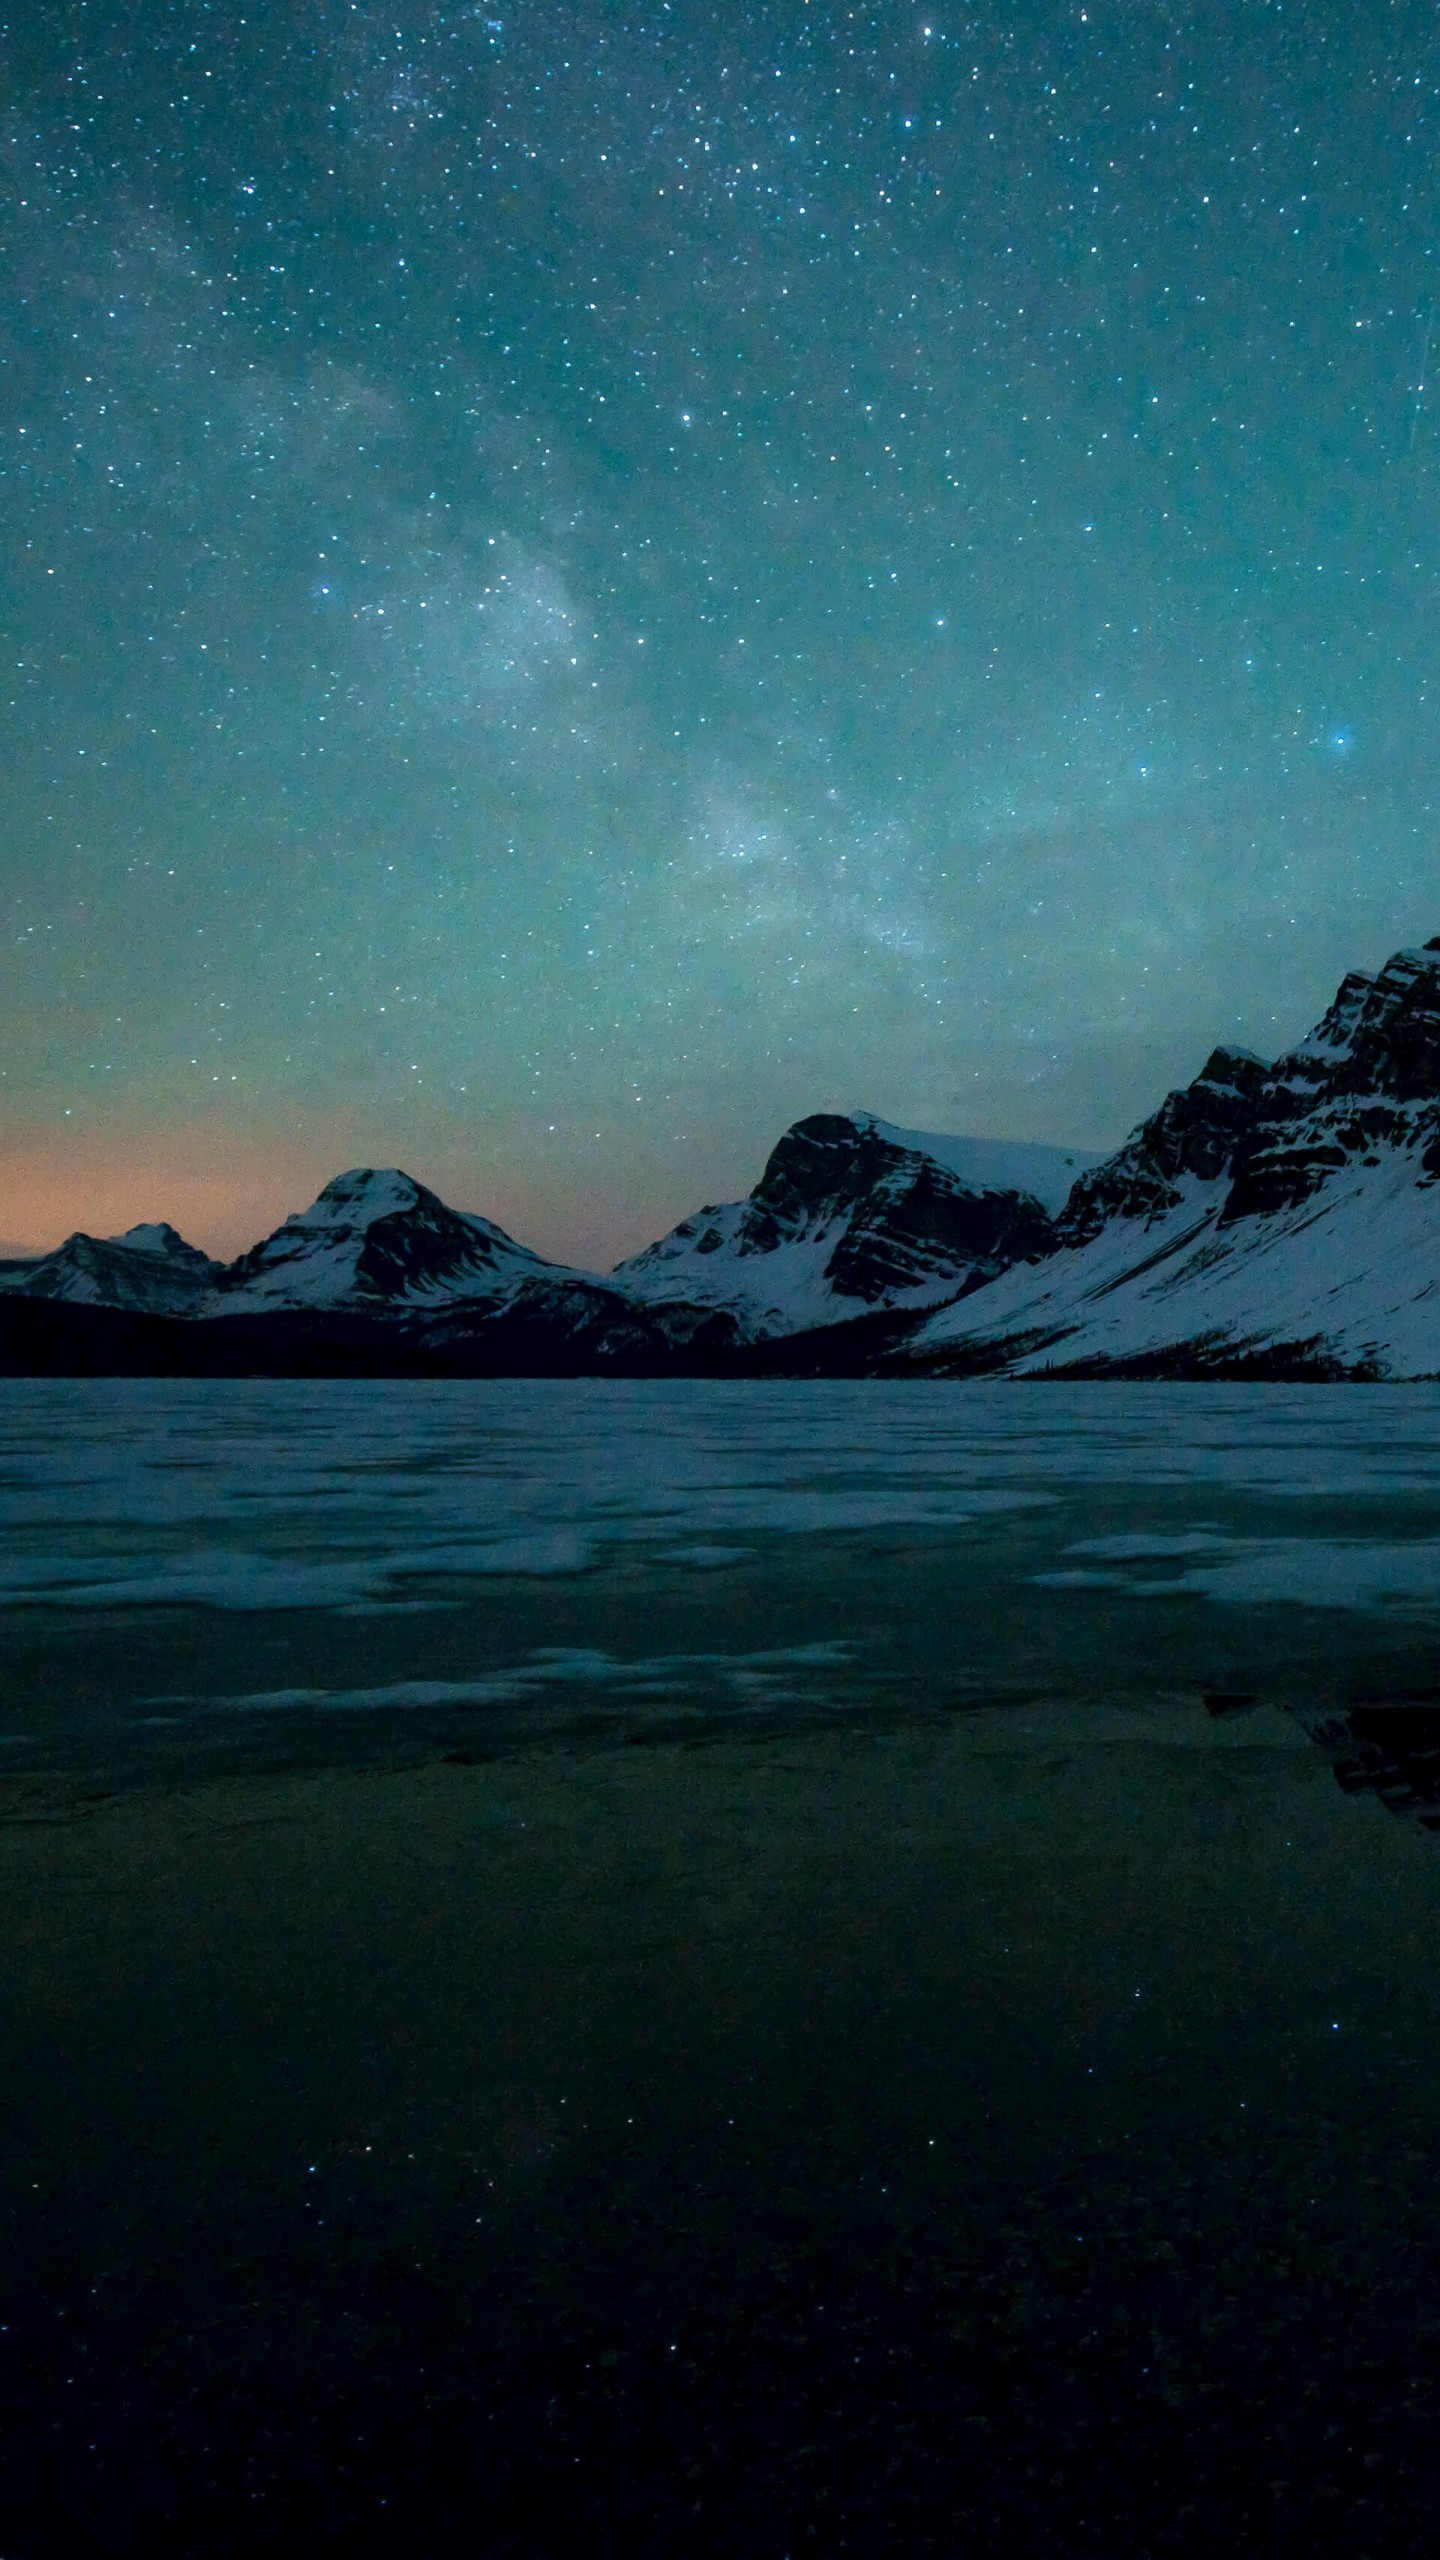 Milky Way over Bow Lake, Alberta, Canada Wallpaper for Google Nexus 6